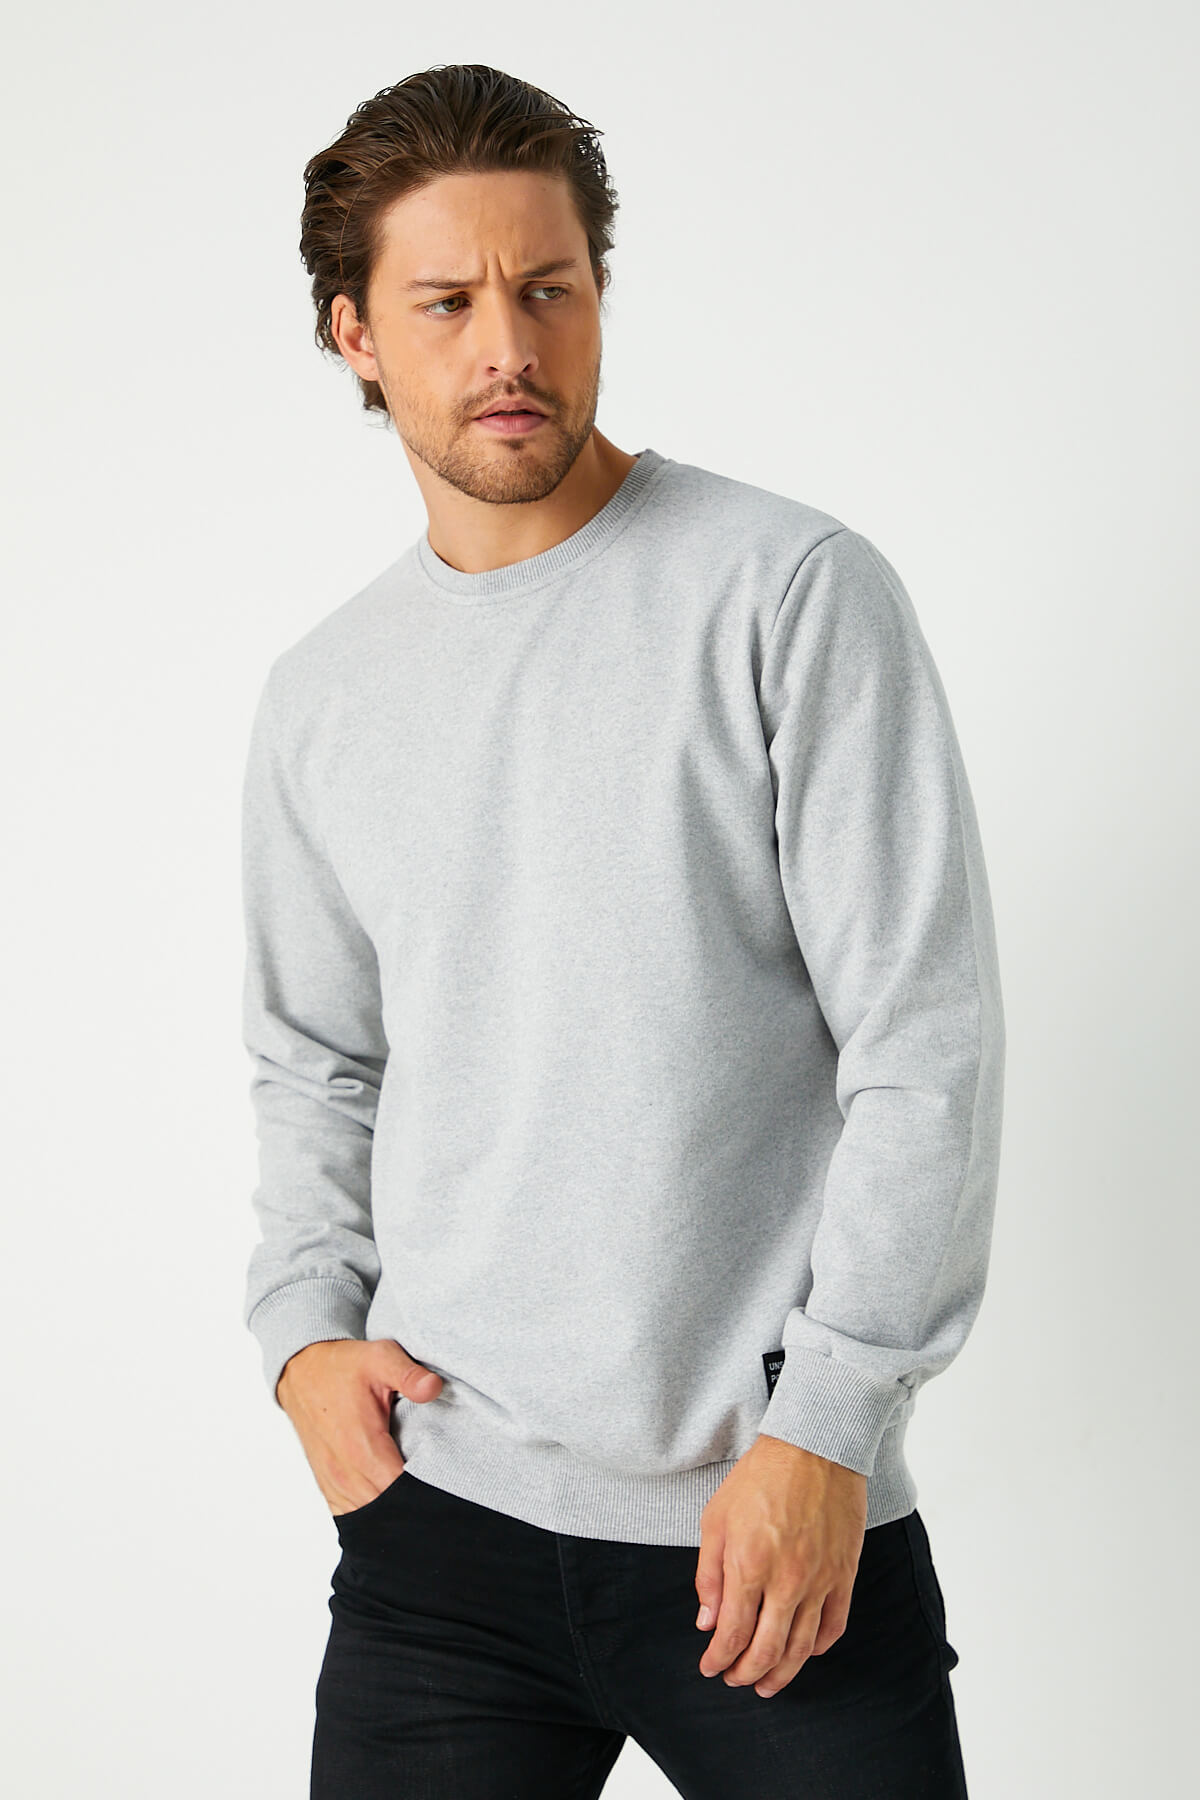 Sweatshirts - ByComeor - Wholesale Products